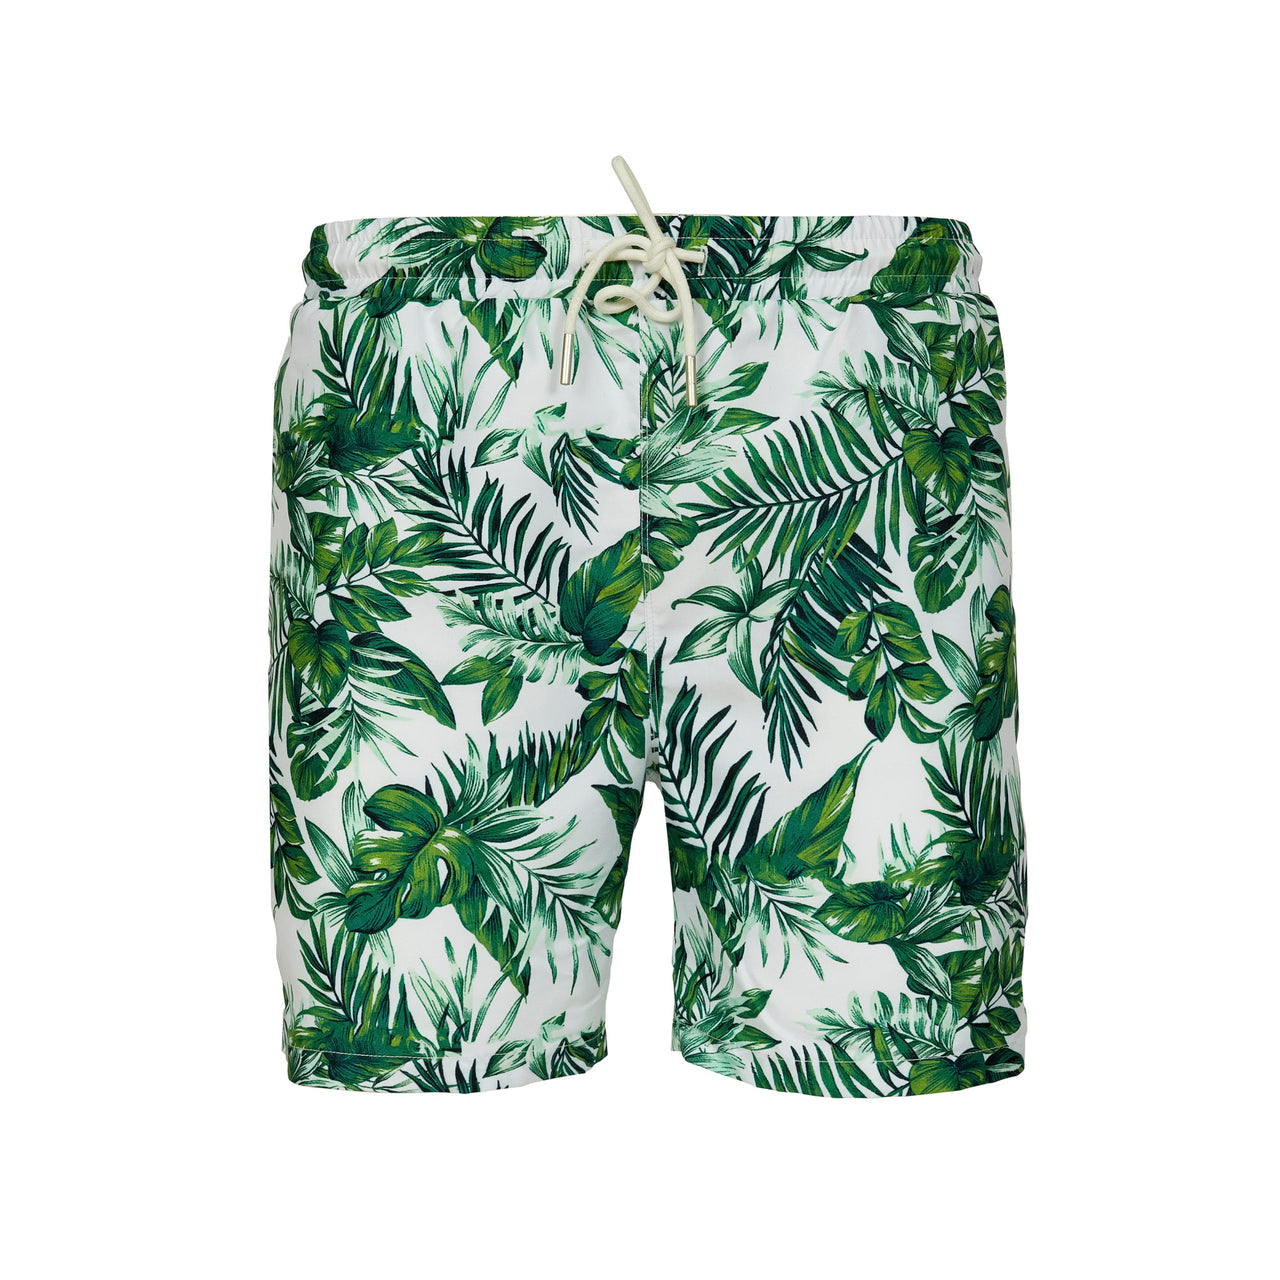 Bucks Casual Printed Shorts Palm Print